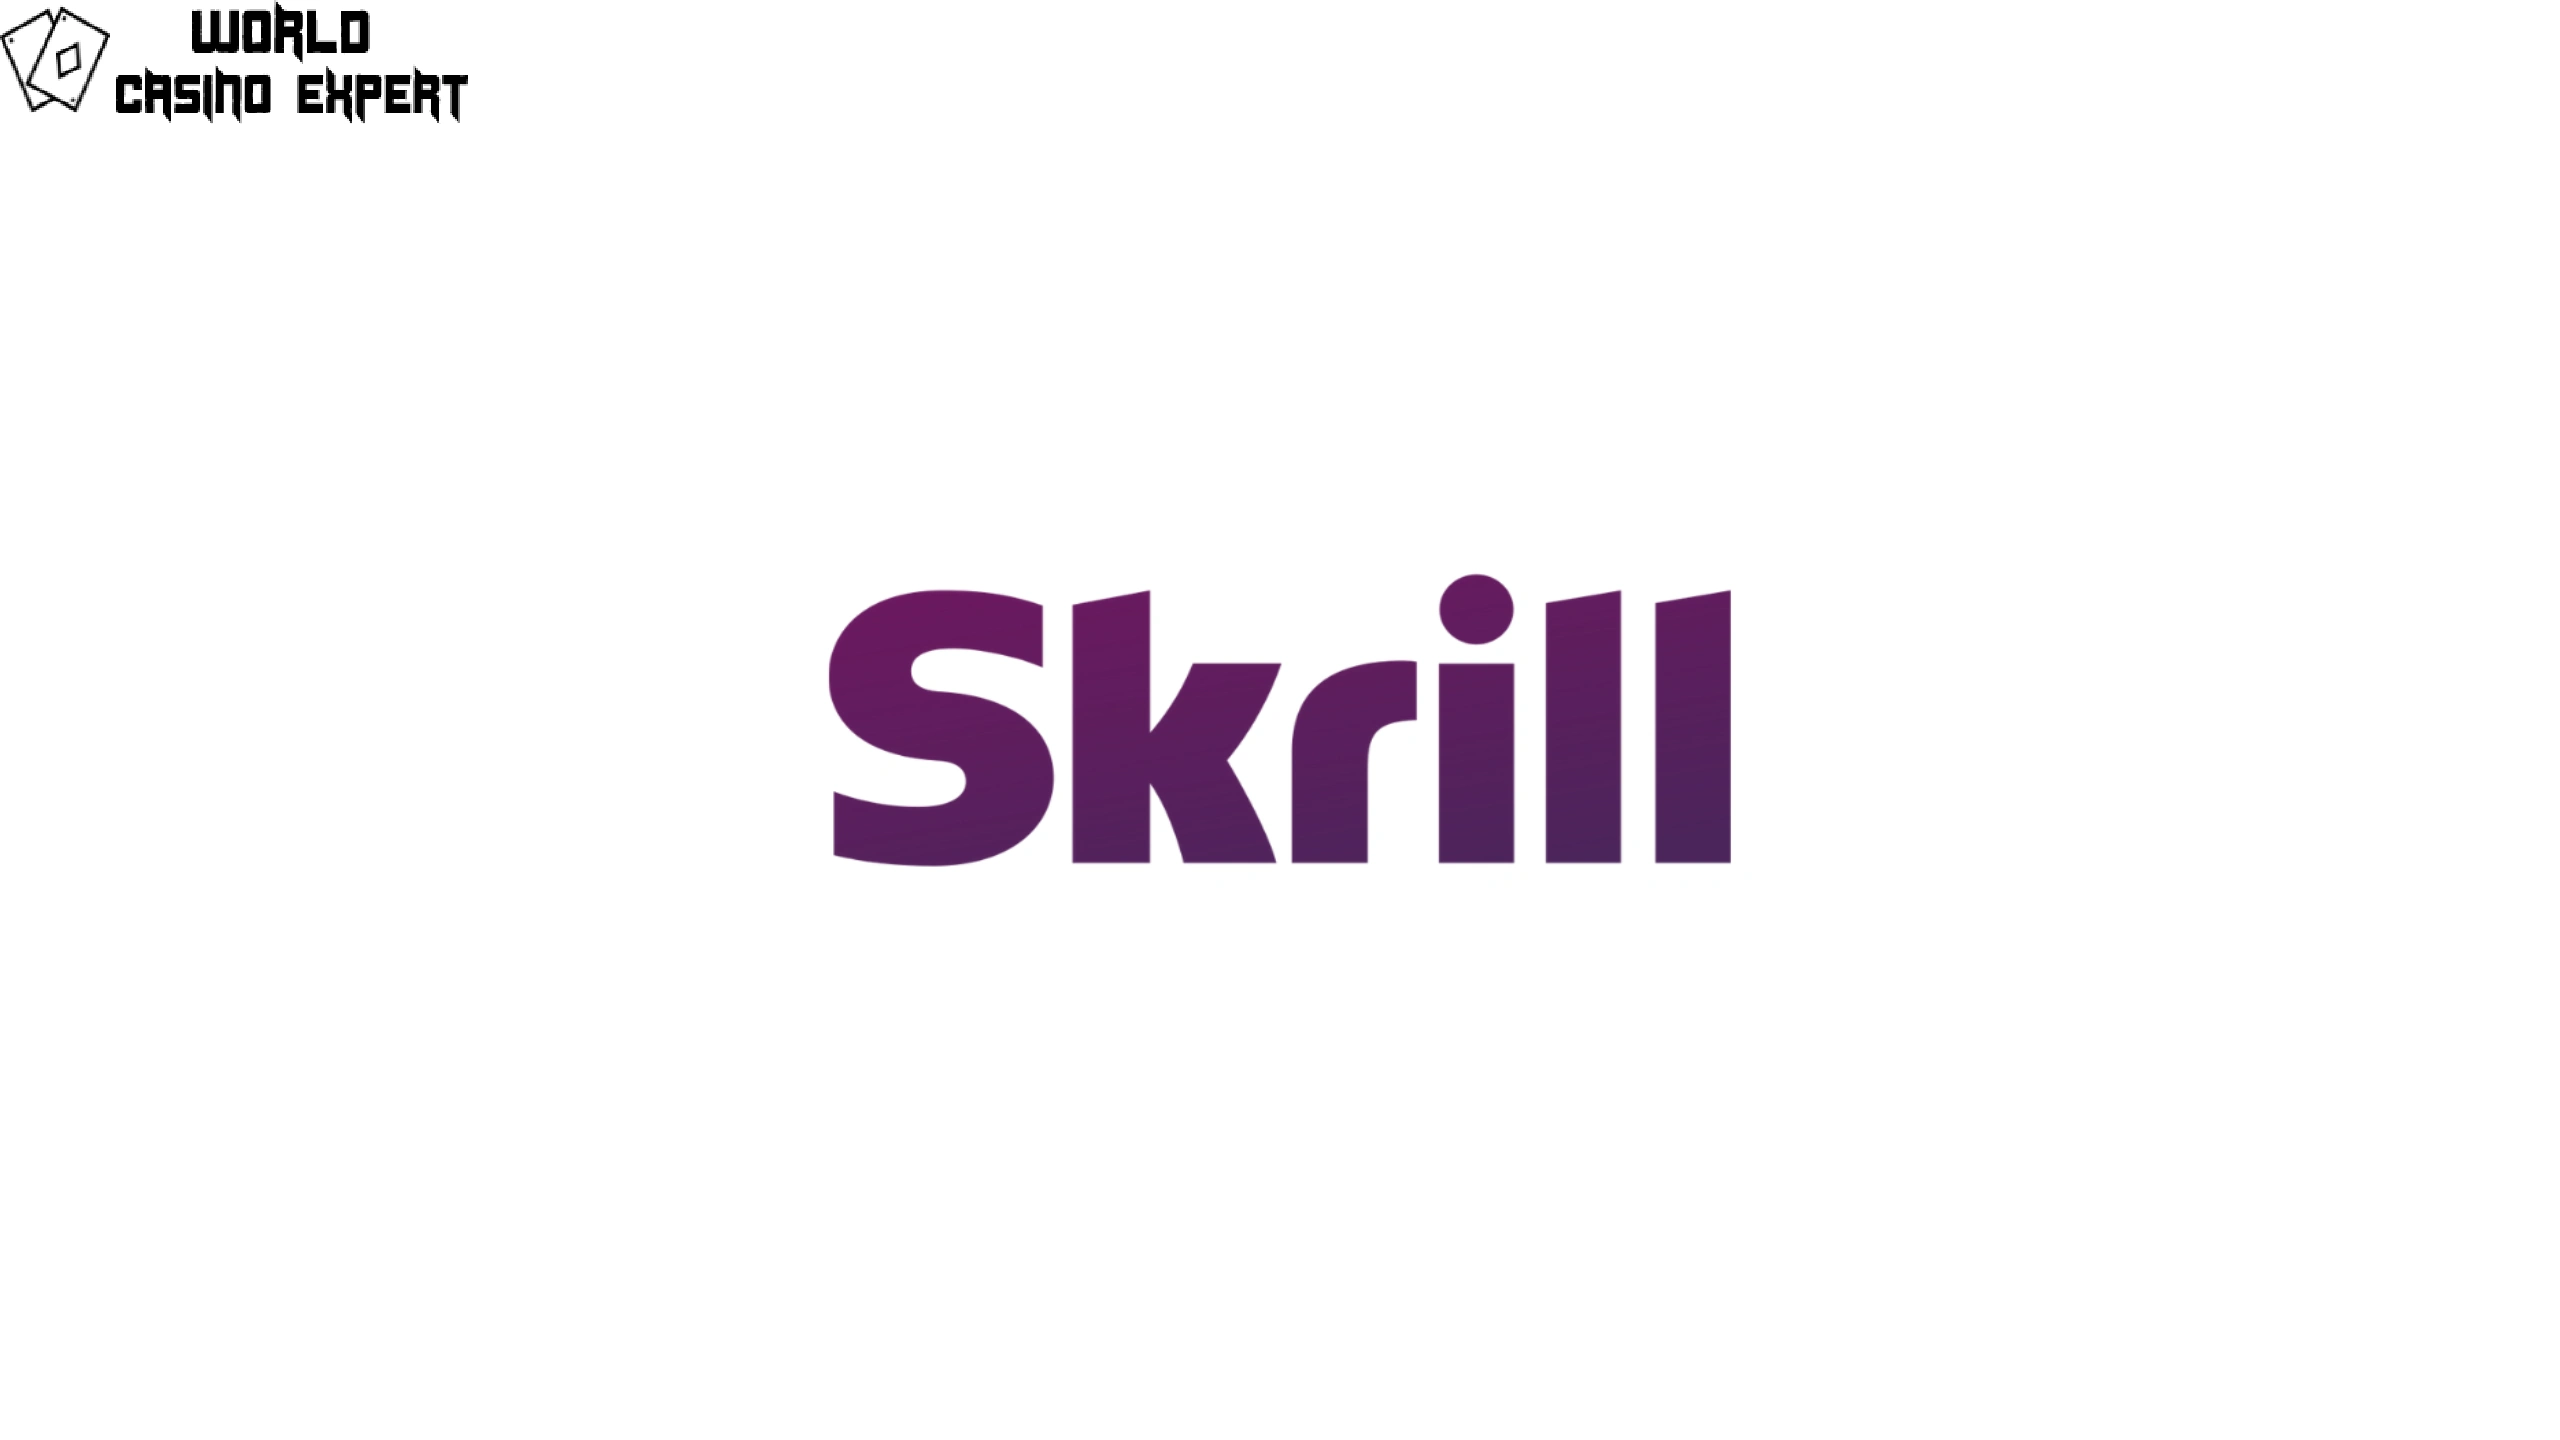 Top Online Casinos with Skrill | World Casino Expert